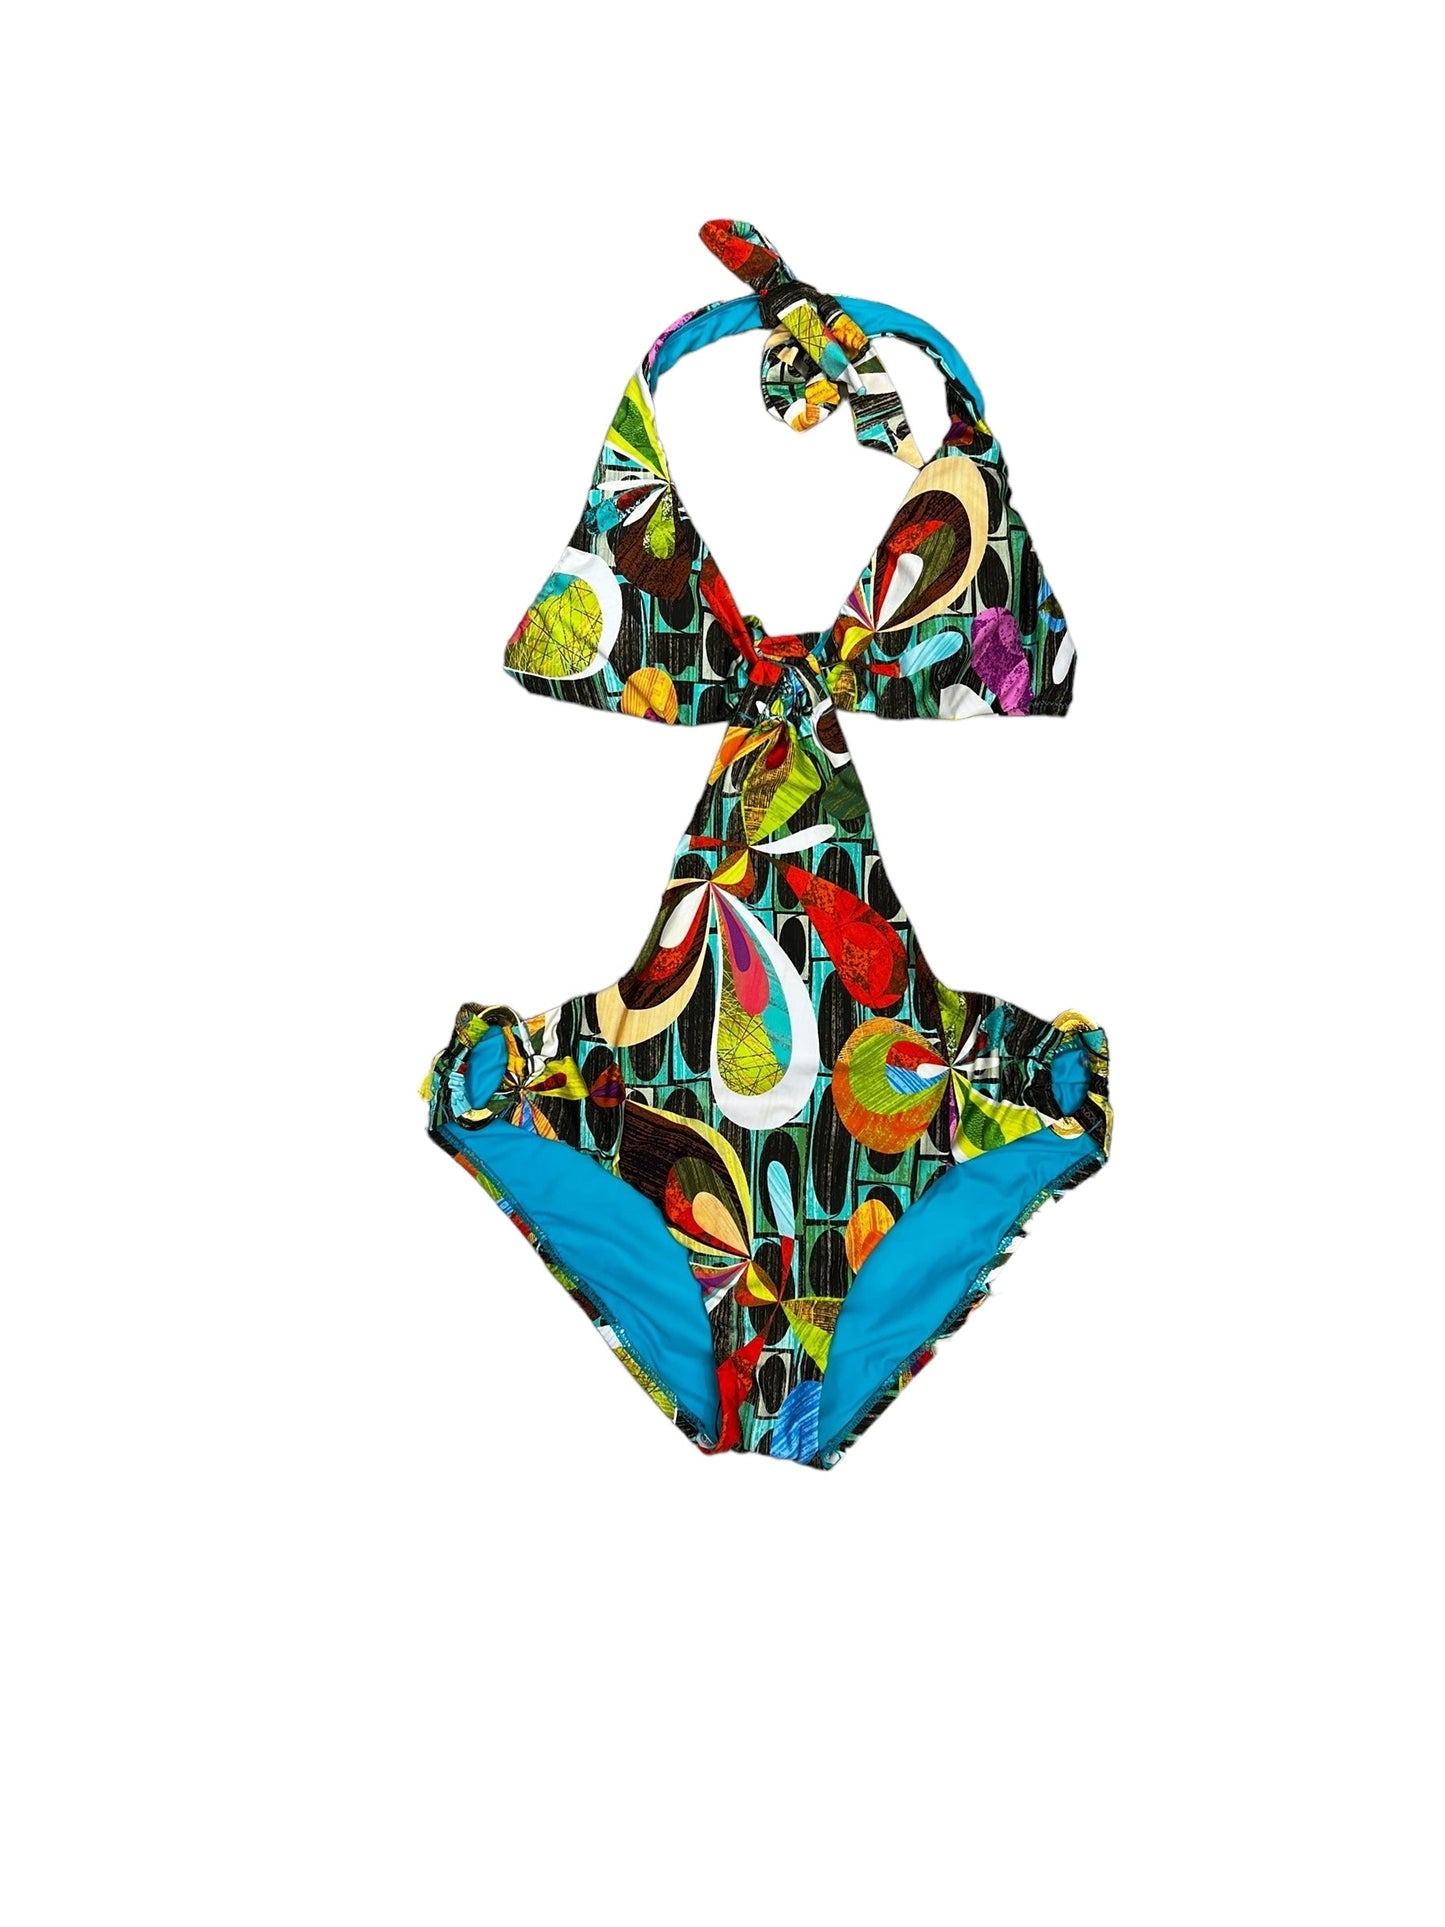 Multi-colored Swimsuit Designer Trina Turk, Size M